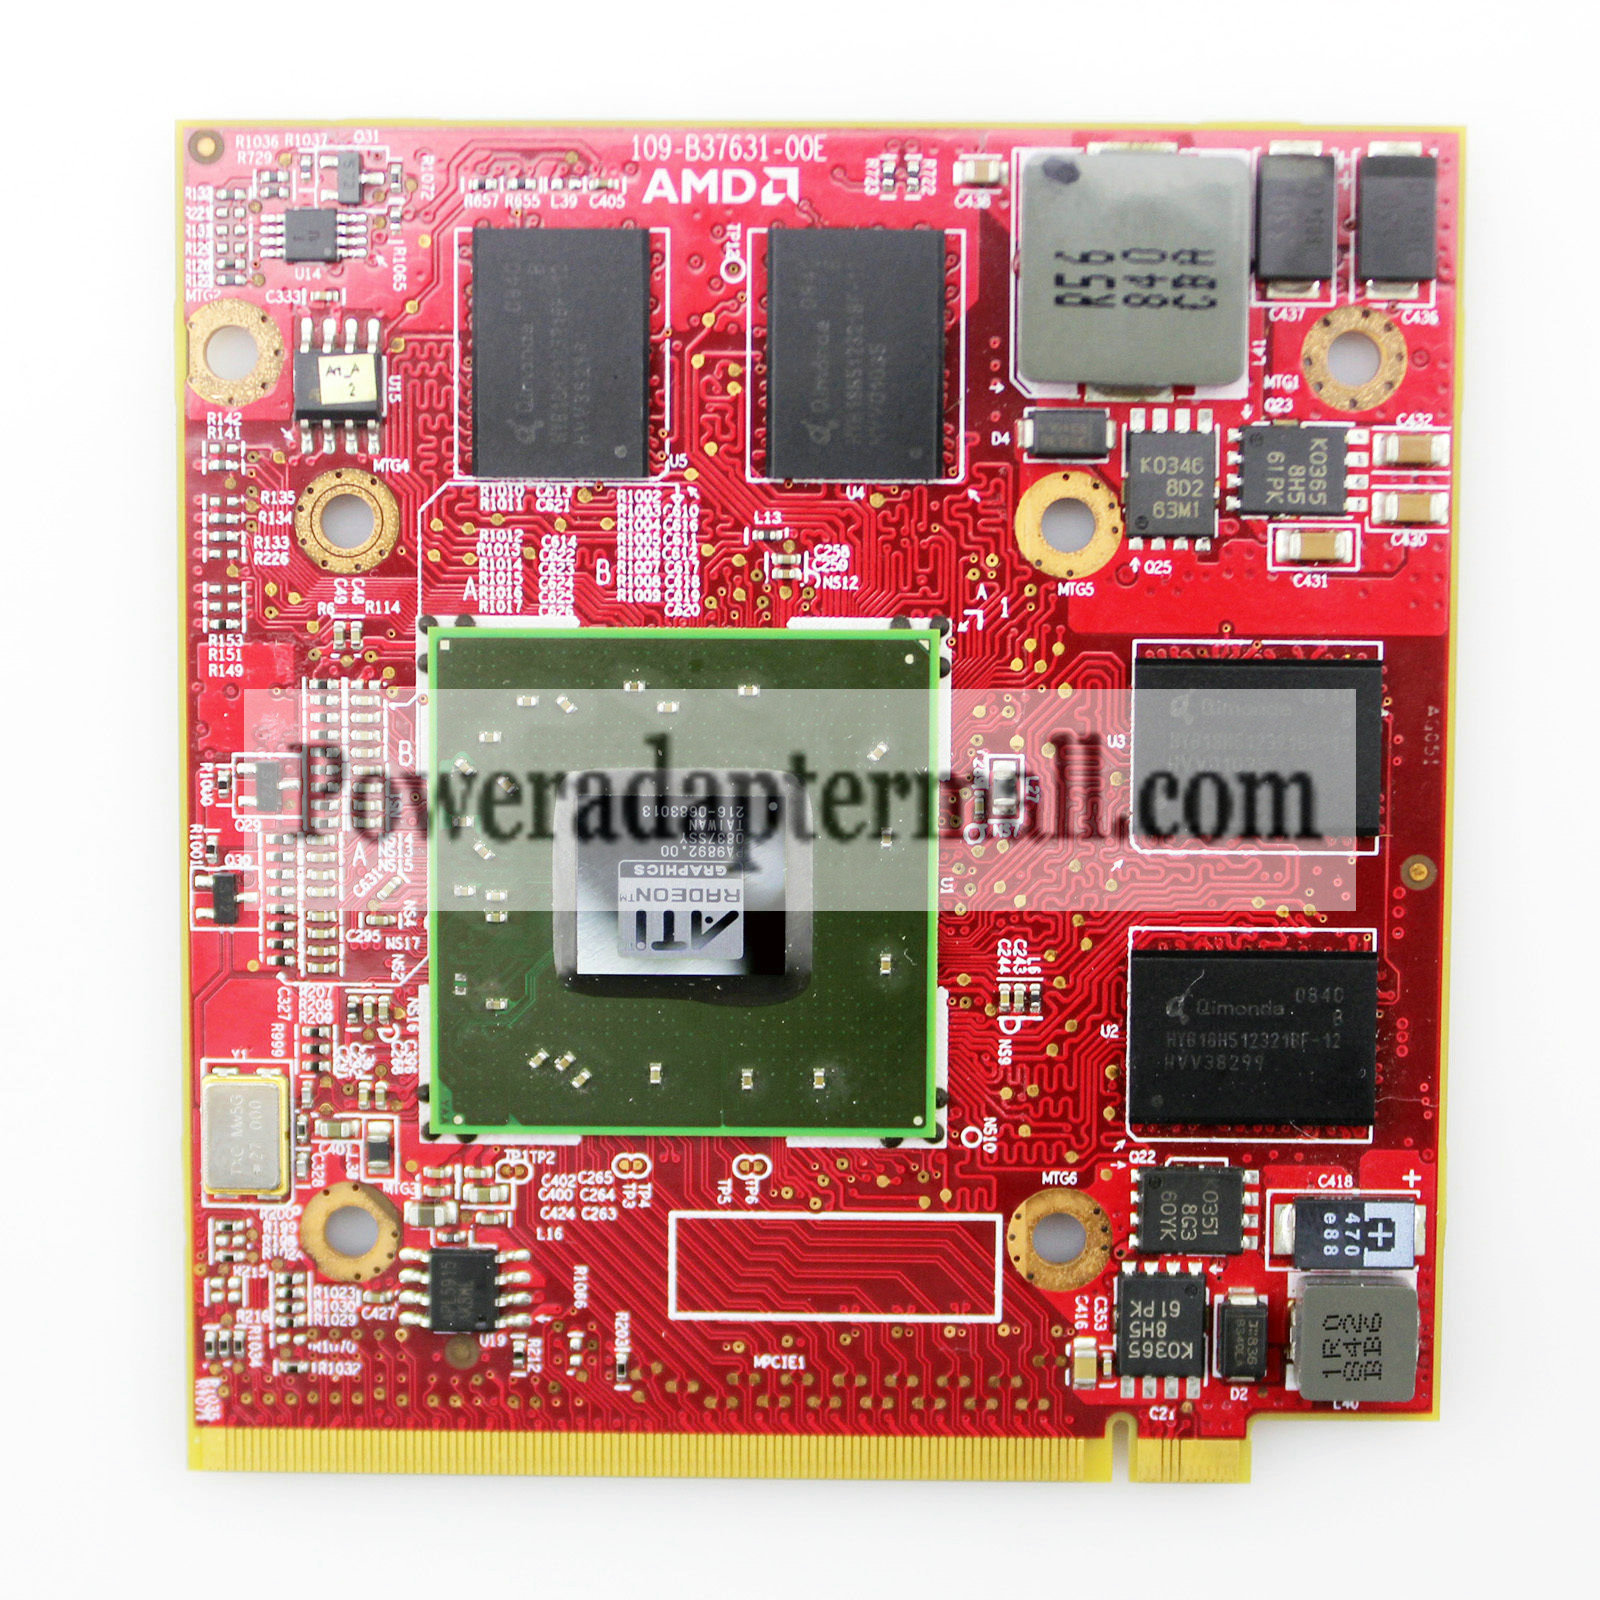 ATI HD 3650 HD3650 MXM VGA Card 256MB DDR3 VG.86M06.002 For Acer